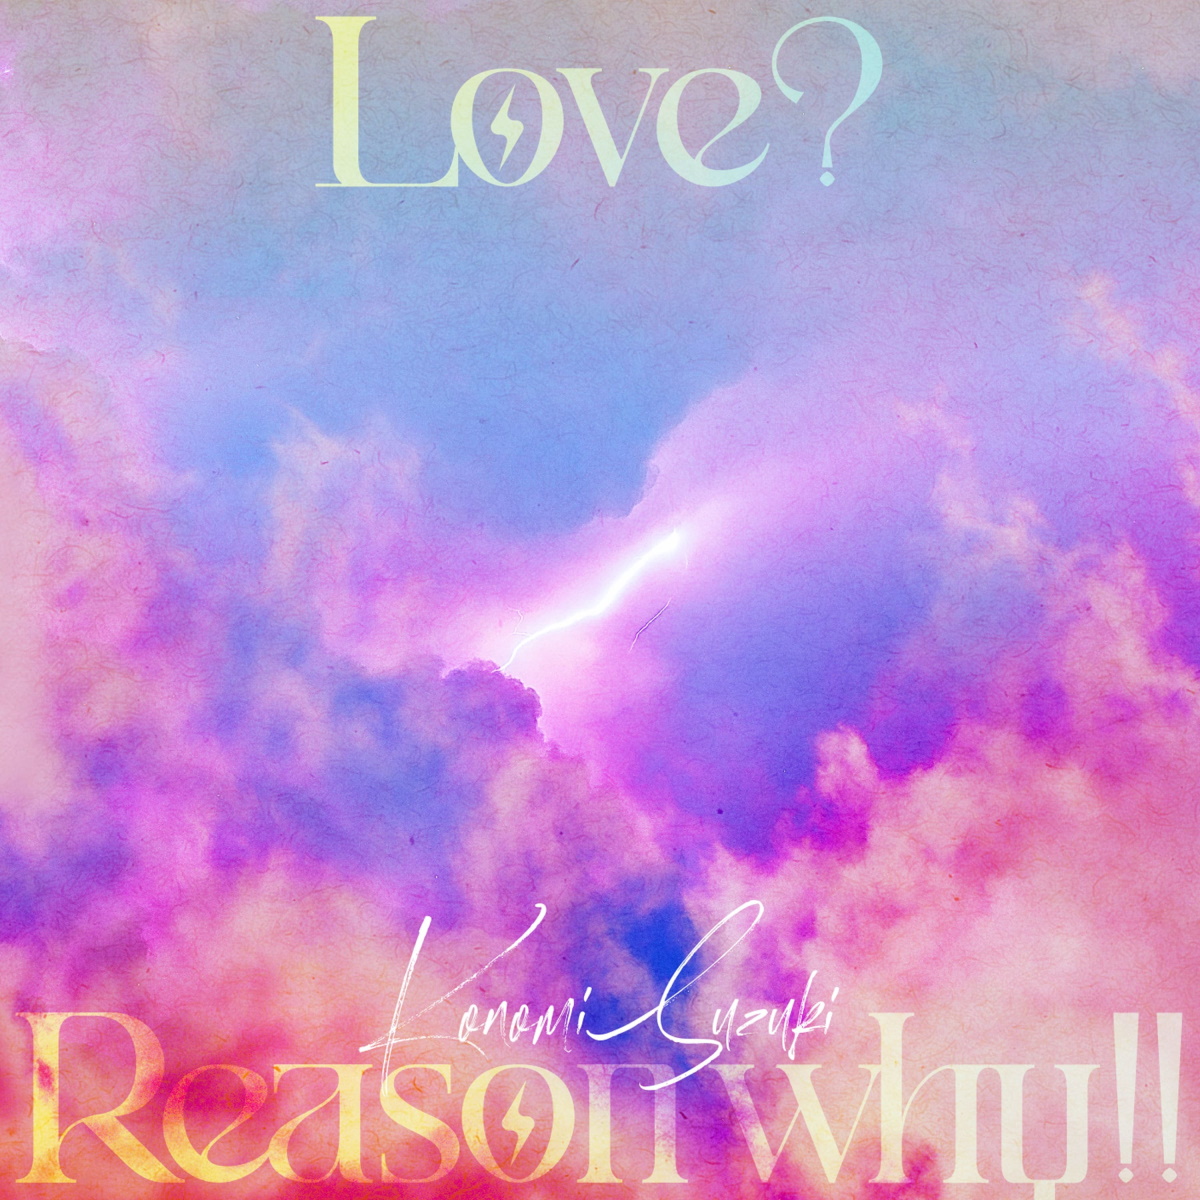 Cover art for『Konomi Suzuki - Secret Code』from the release『Love? Reason why!!』